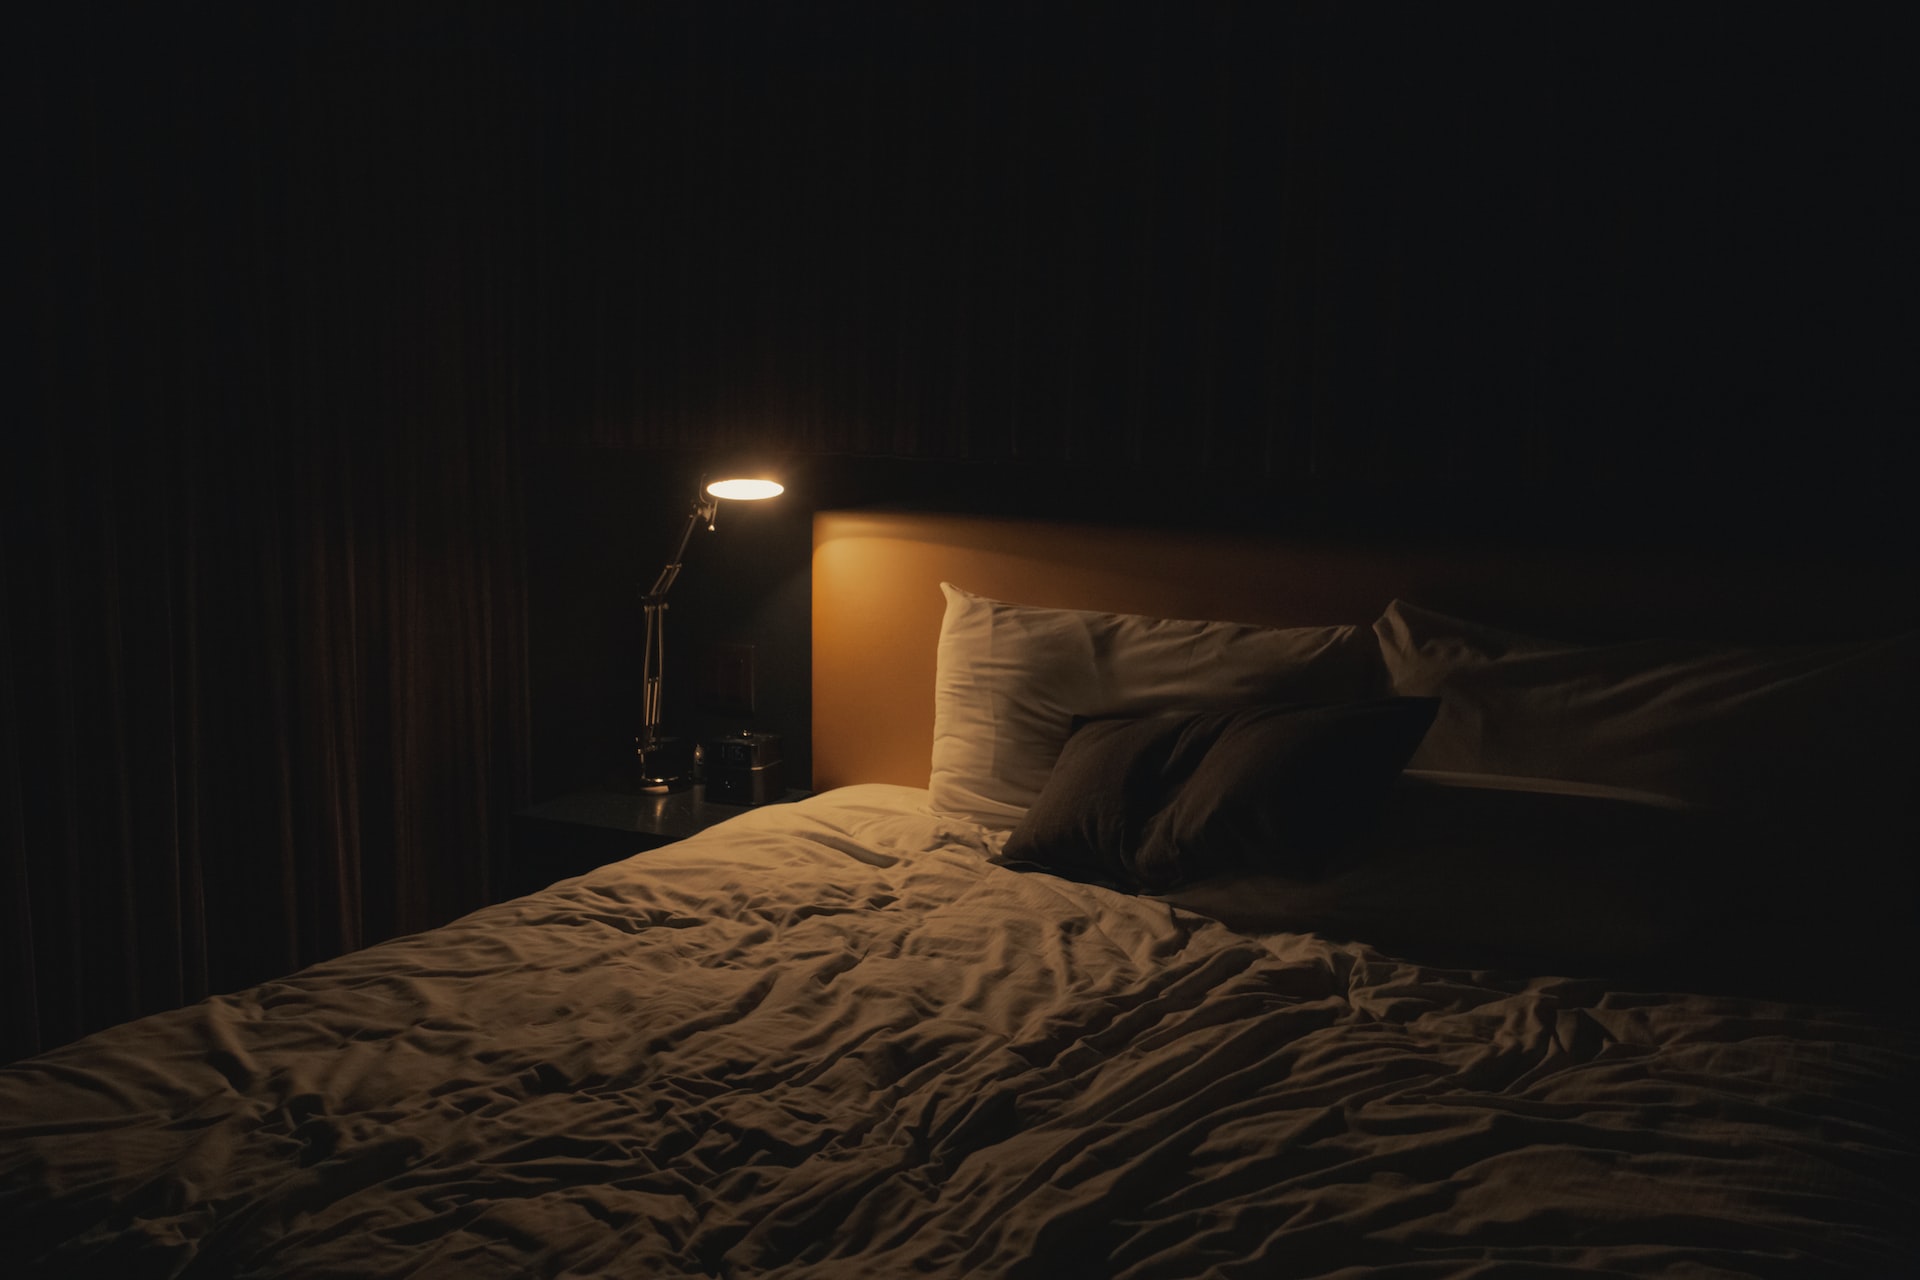 nightlight on beside a new mattress